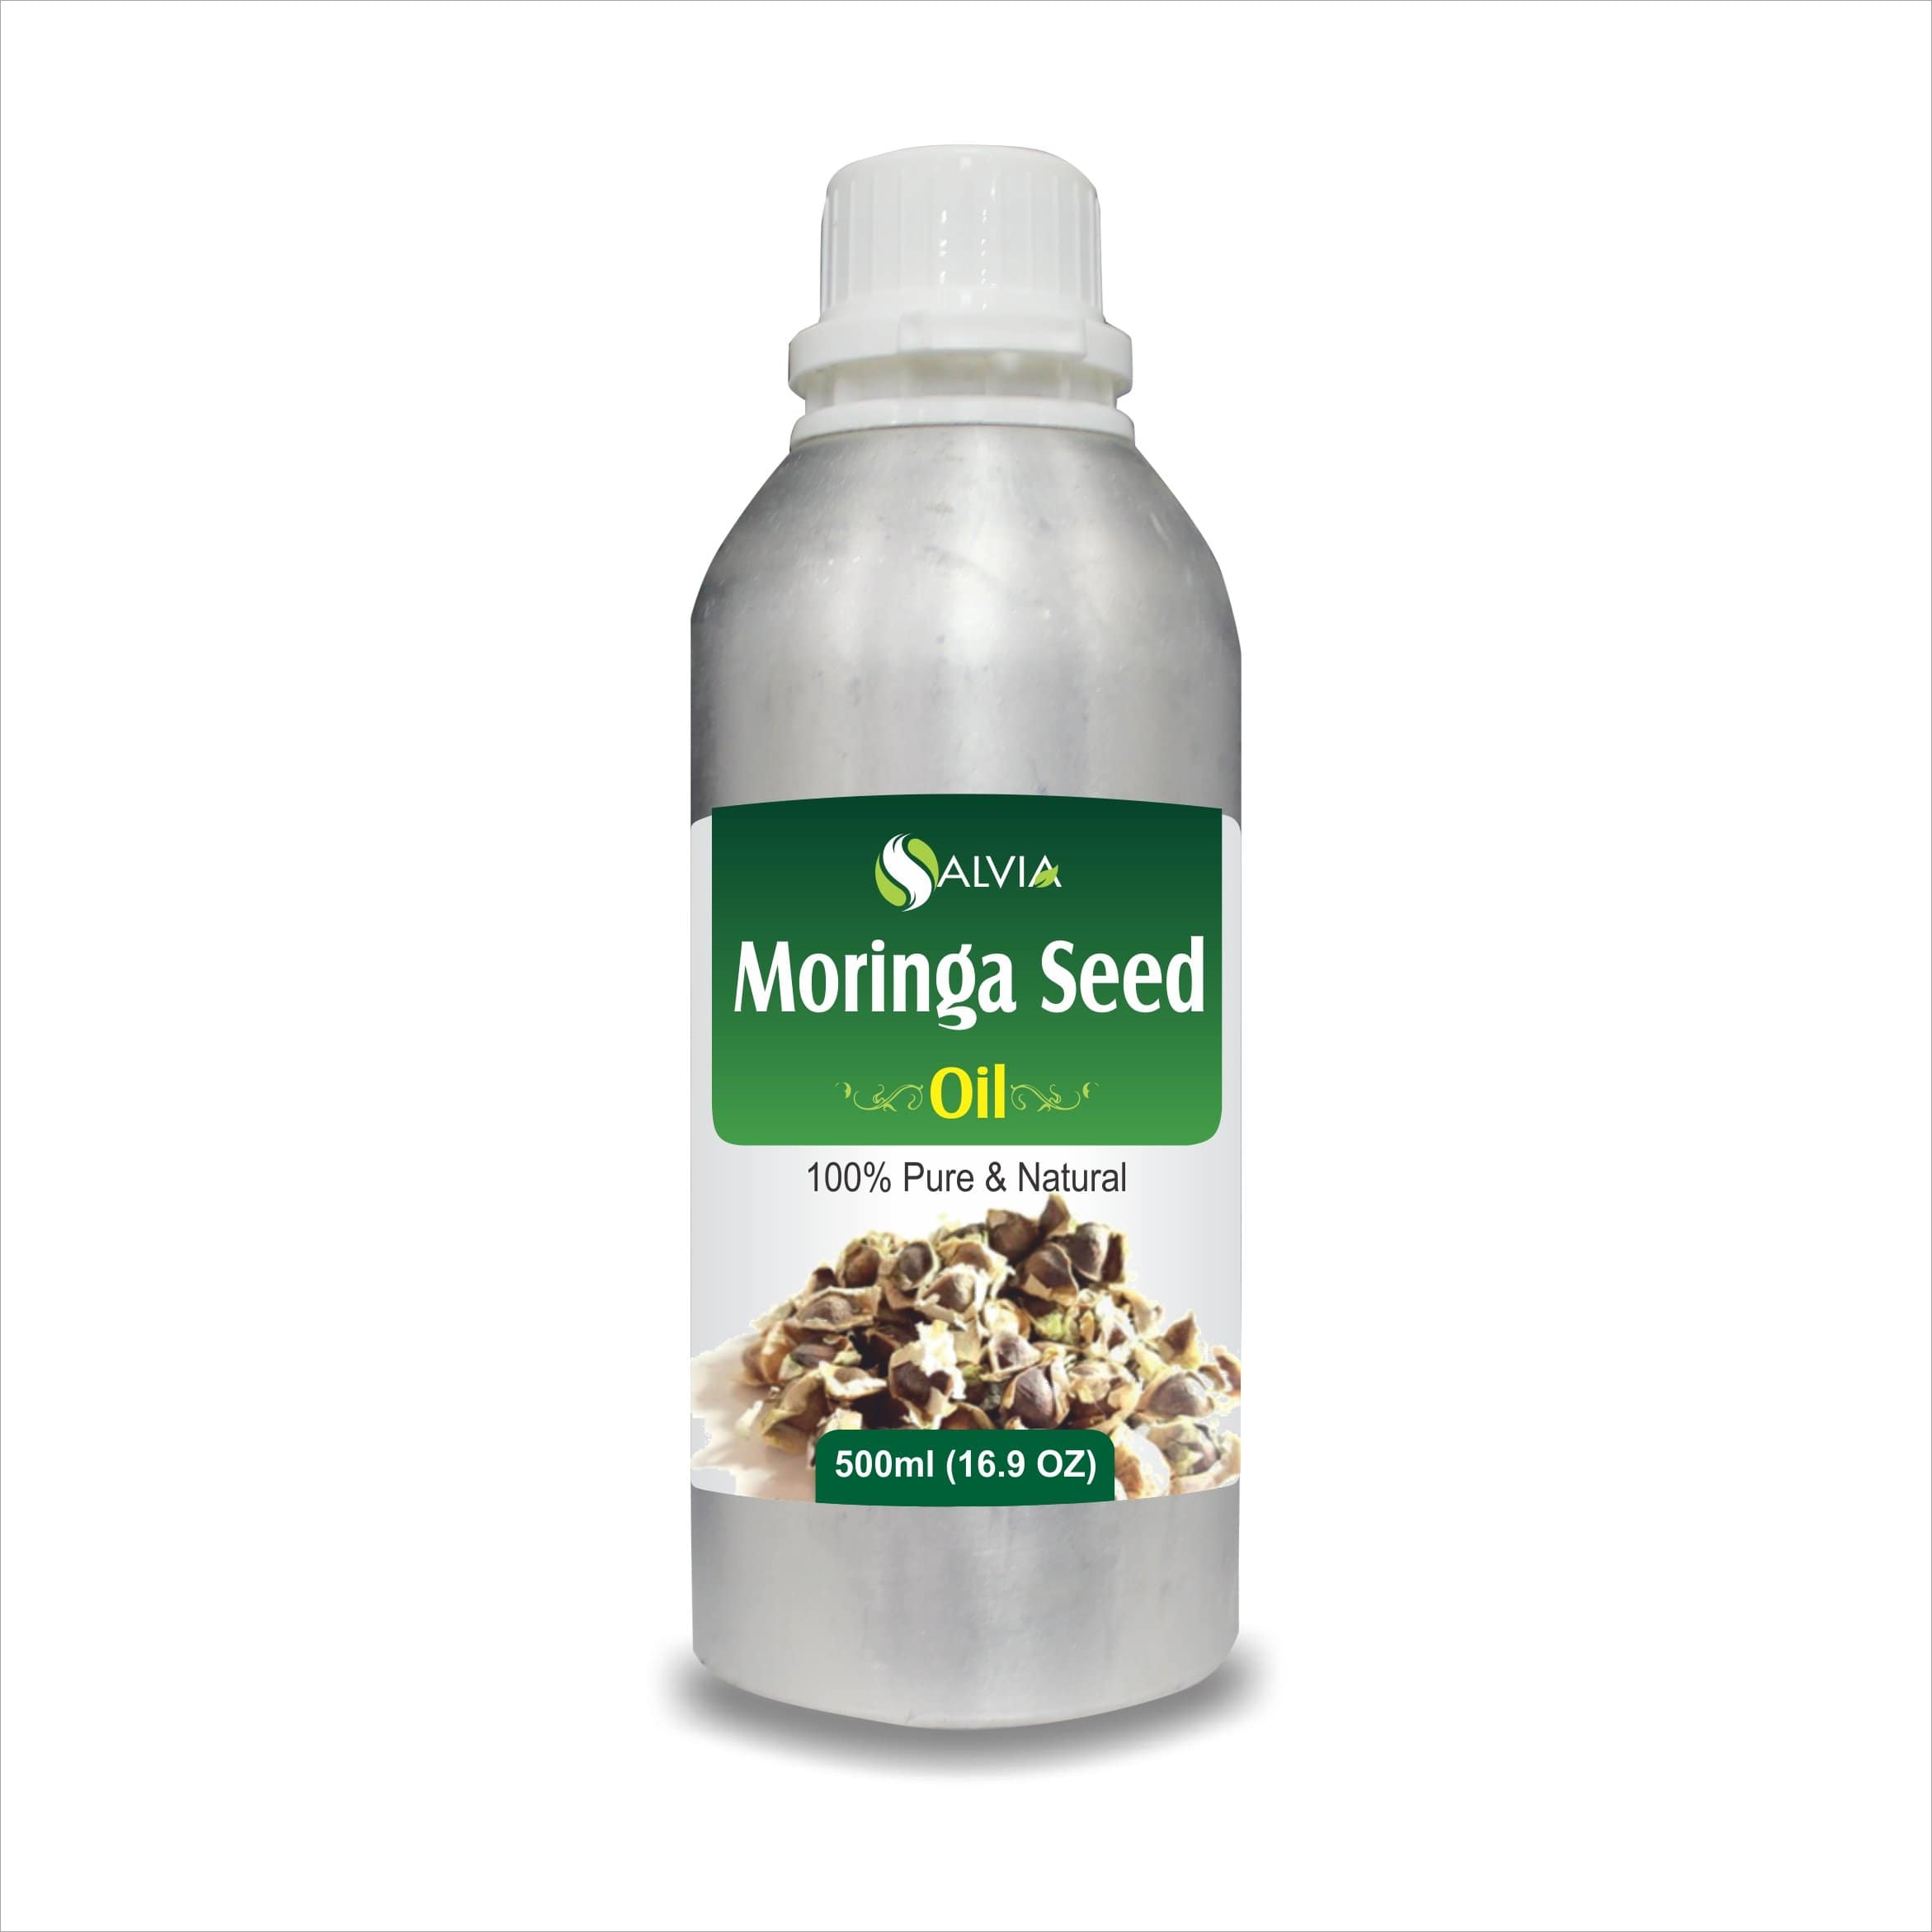 moringa seed oil price